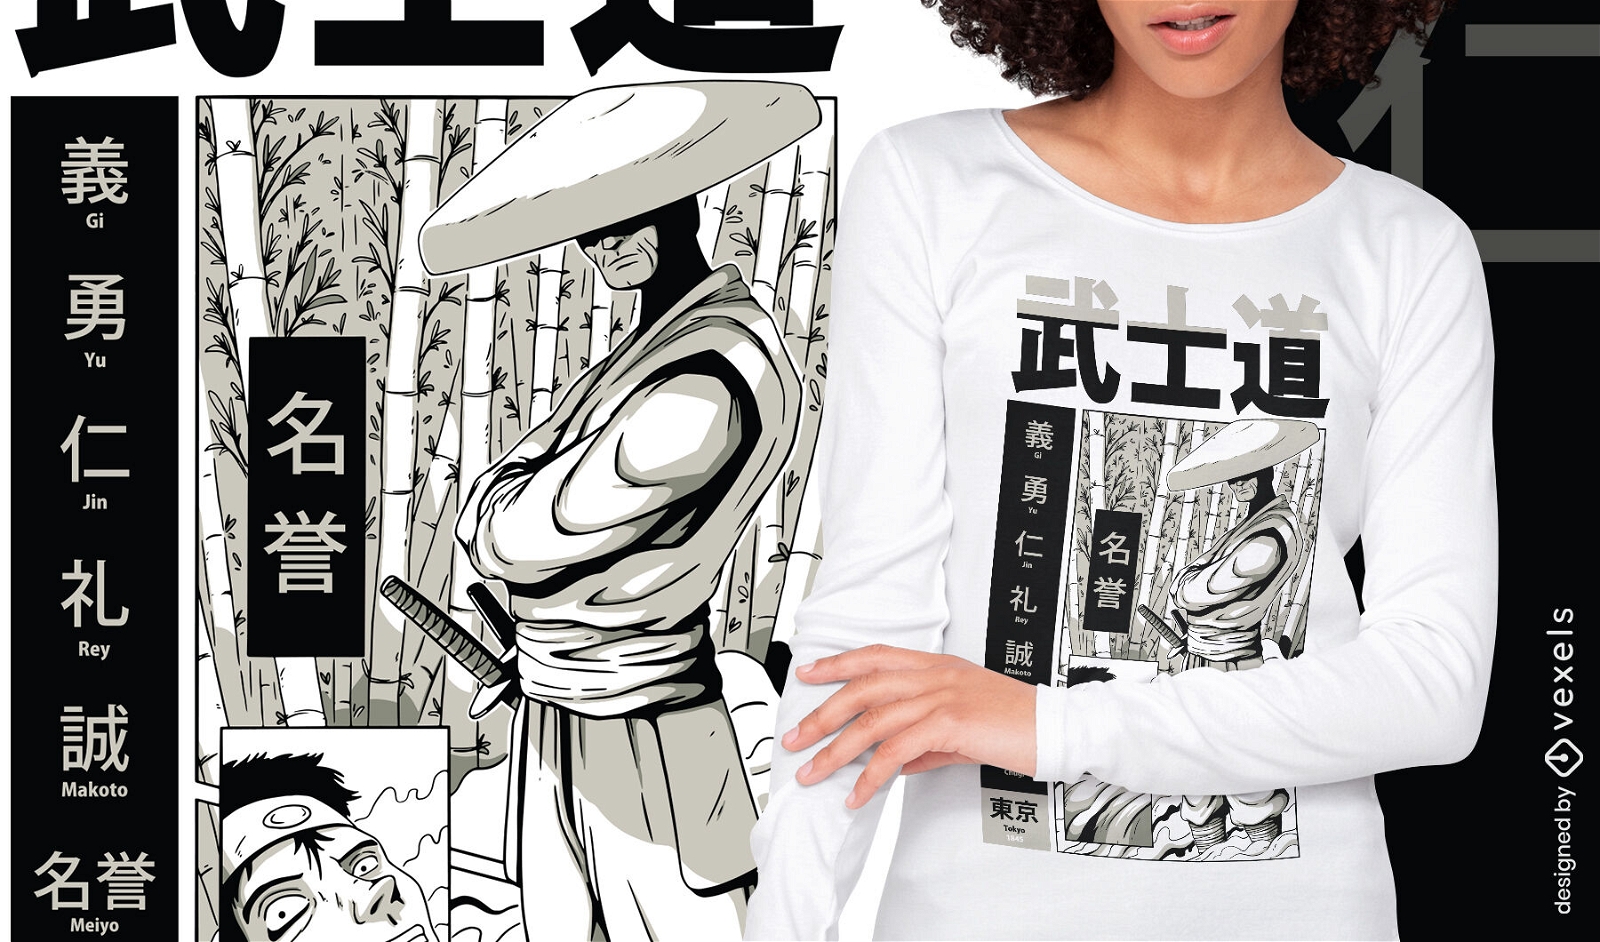 Japan themed samurai t-shirt design